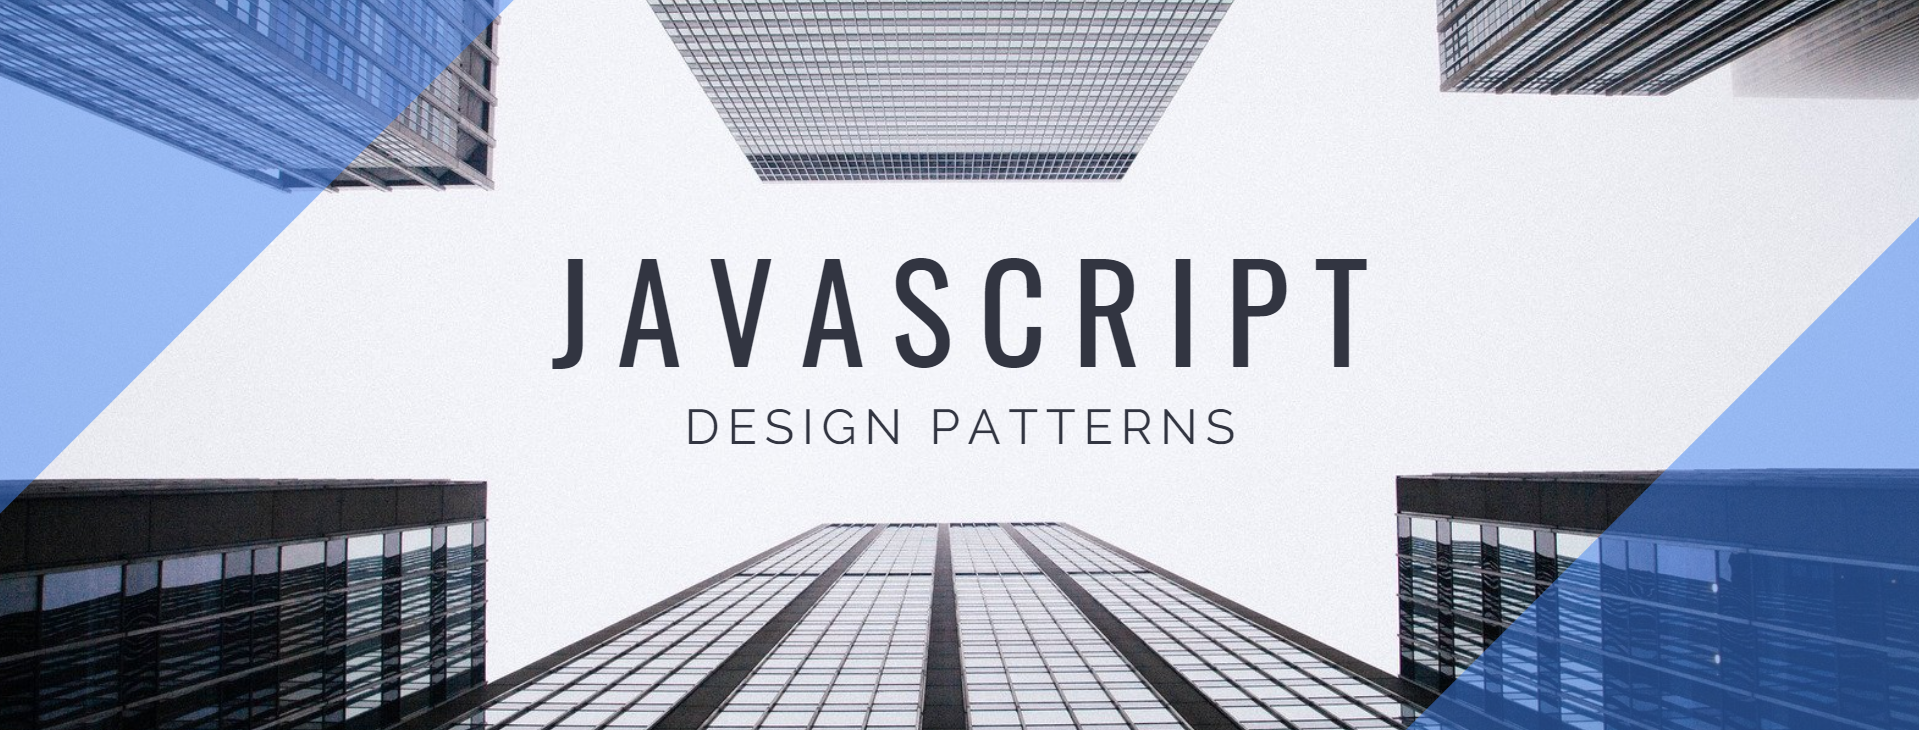 JavaScript Design patterns